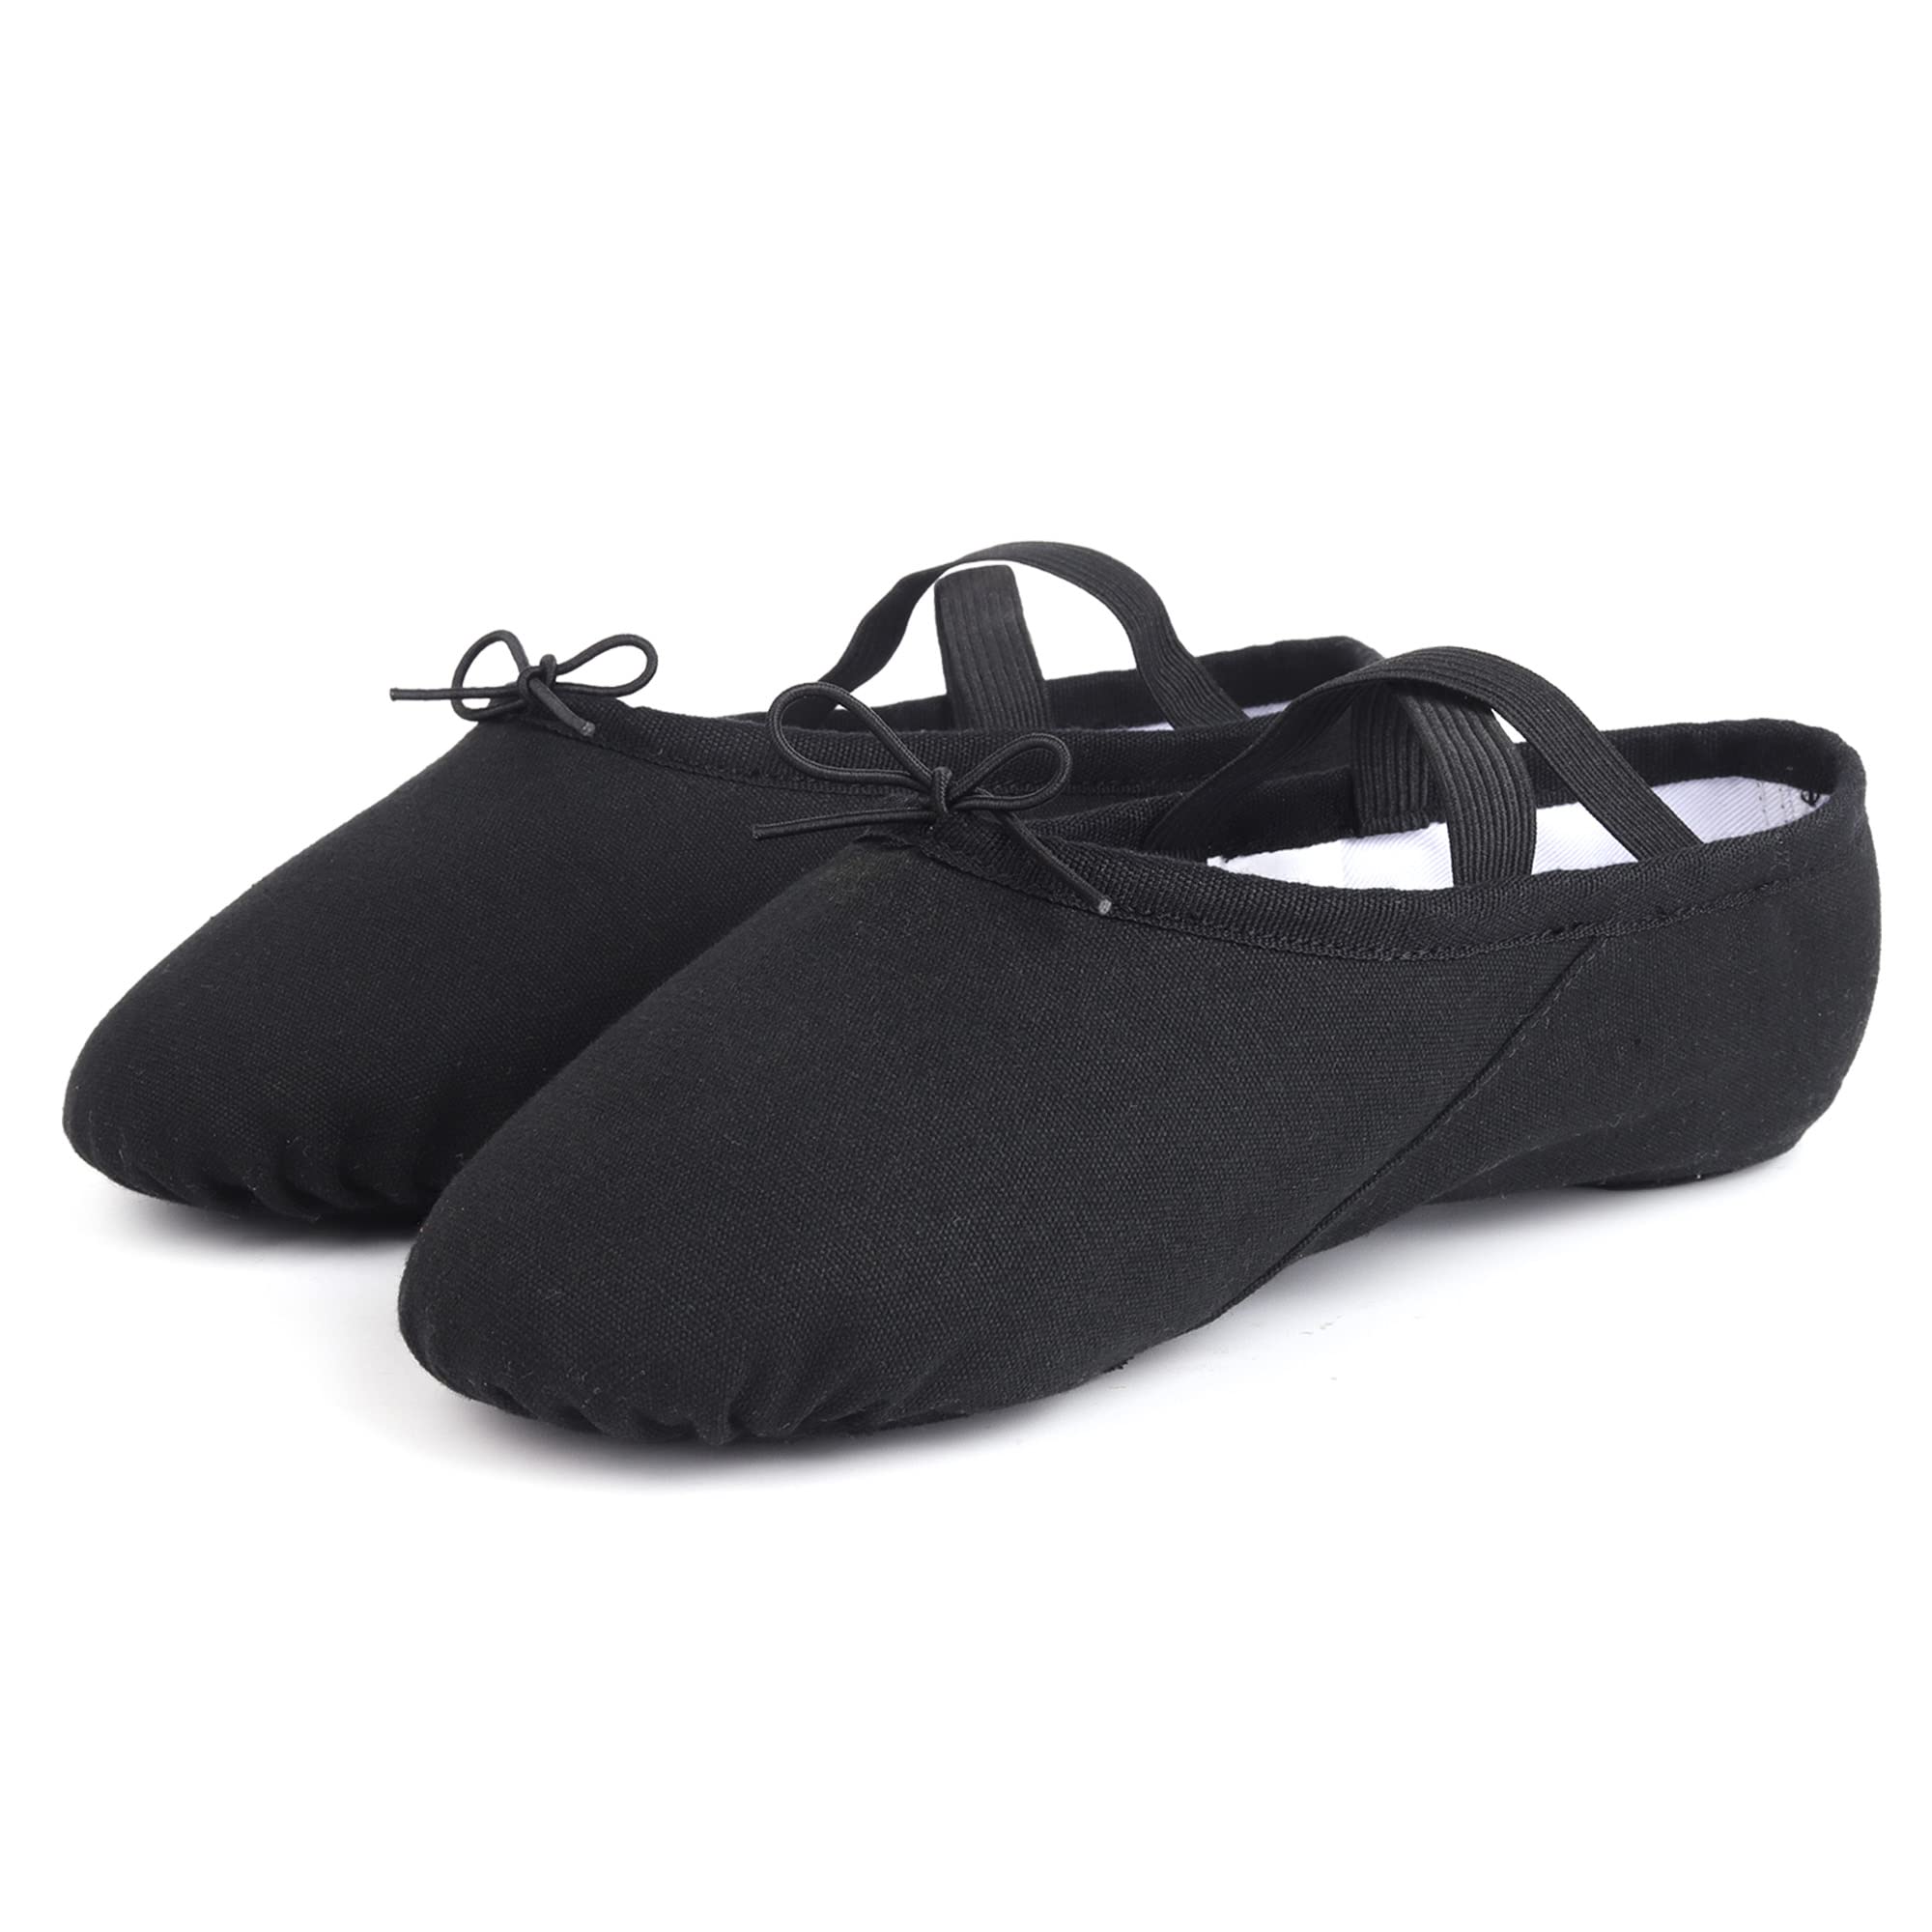 OLORA Women's Canvas Ballet Shoes Dance Slippers Split Sole Practice Shoes for Girls/Adults,Black,8 M US